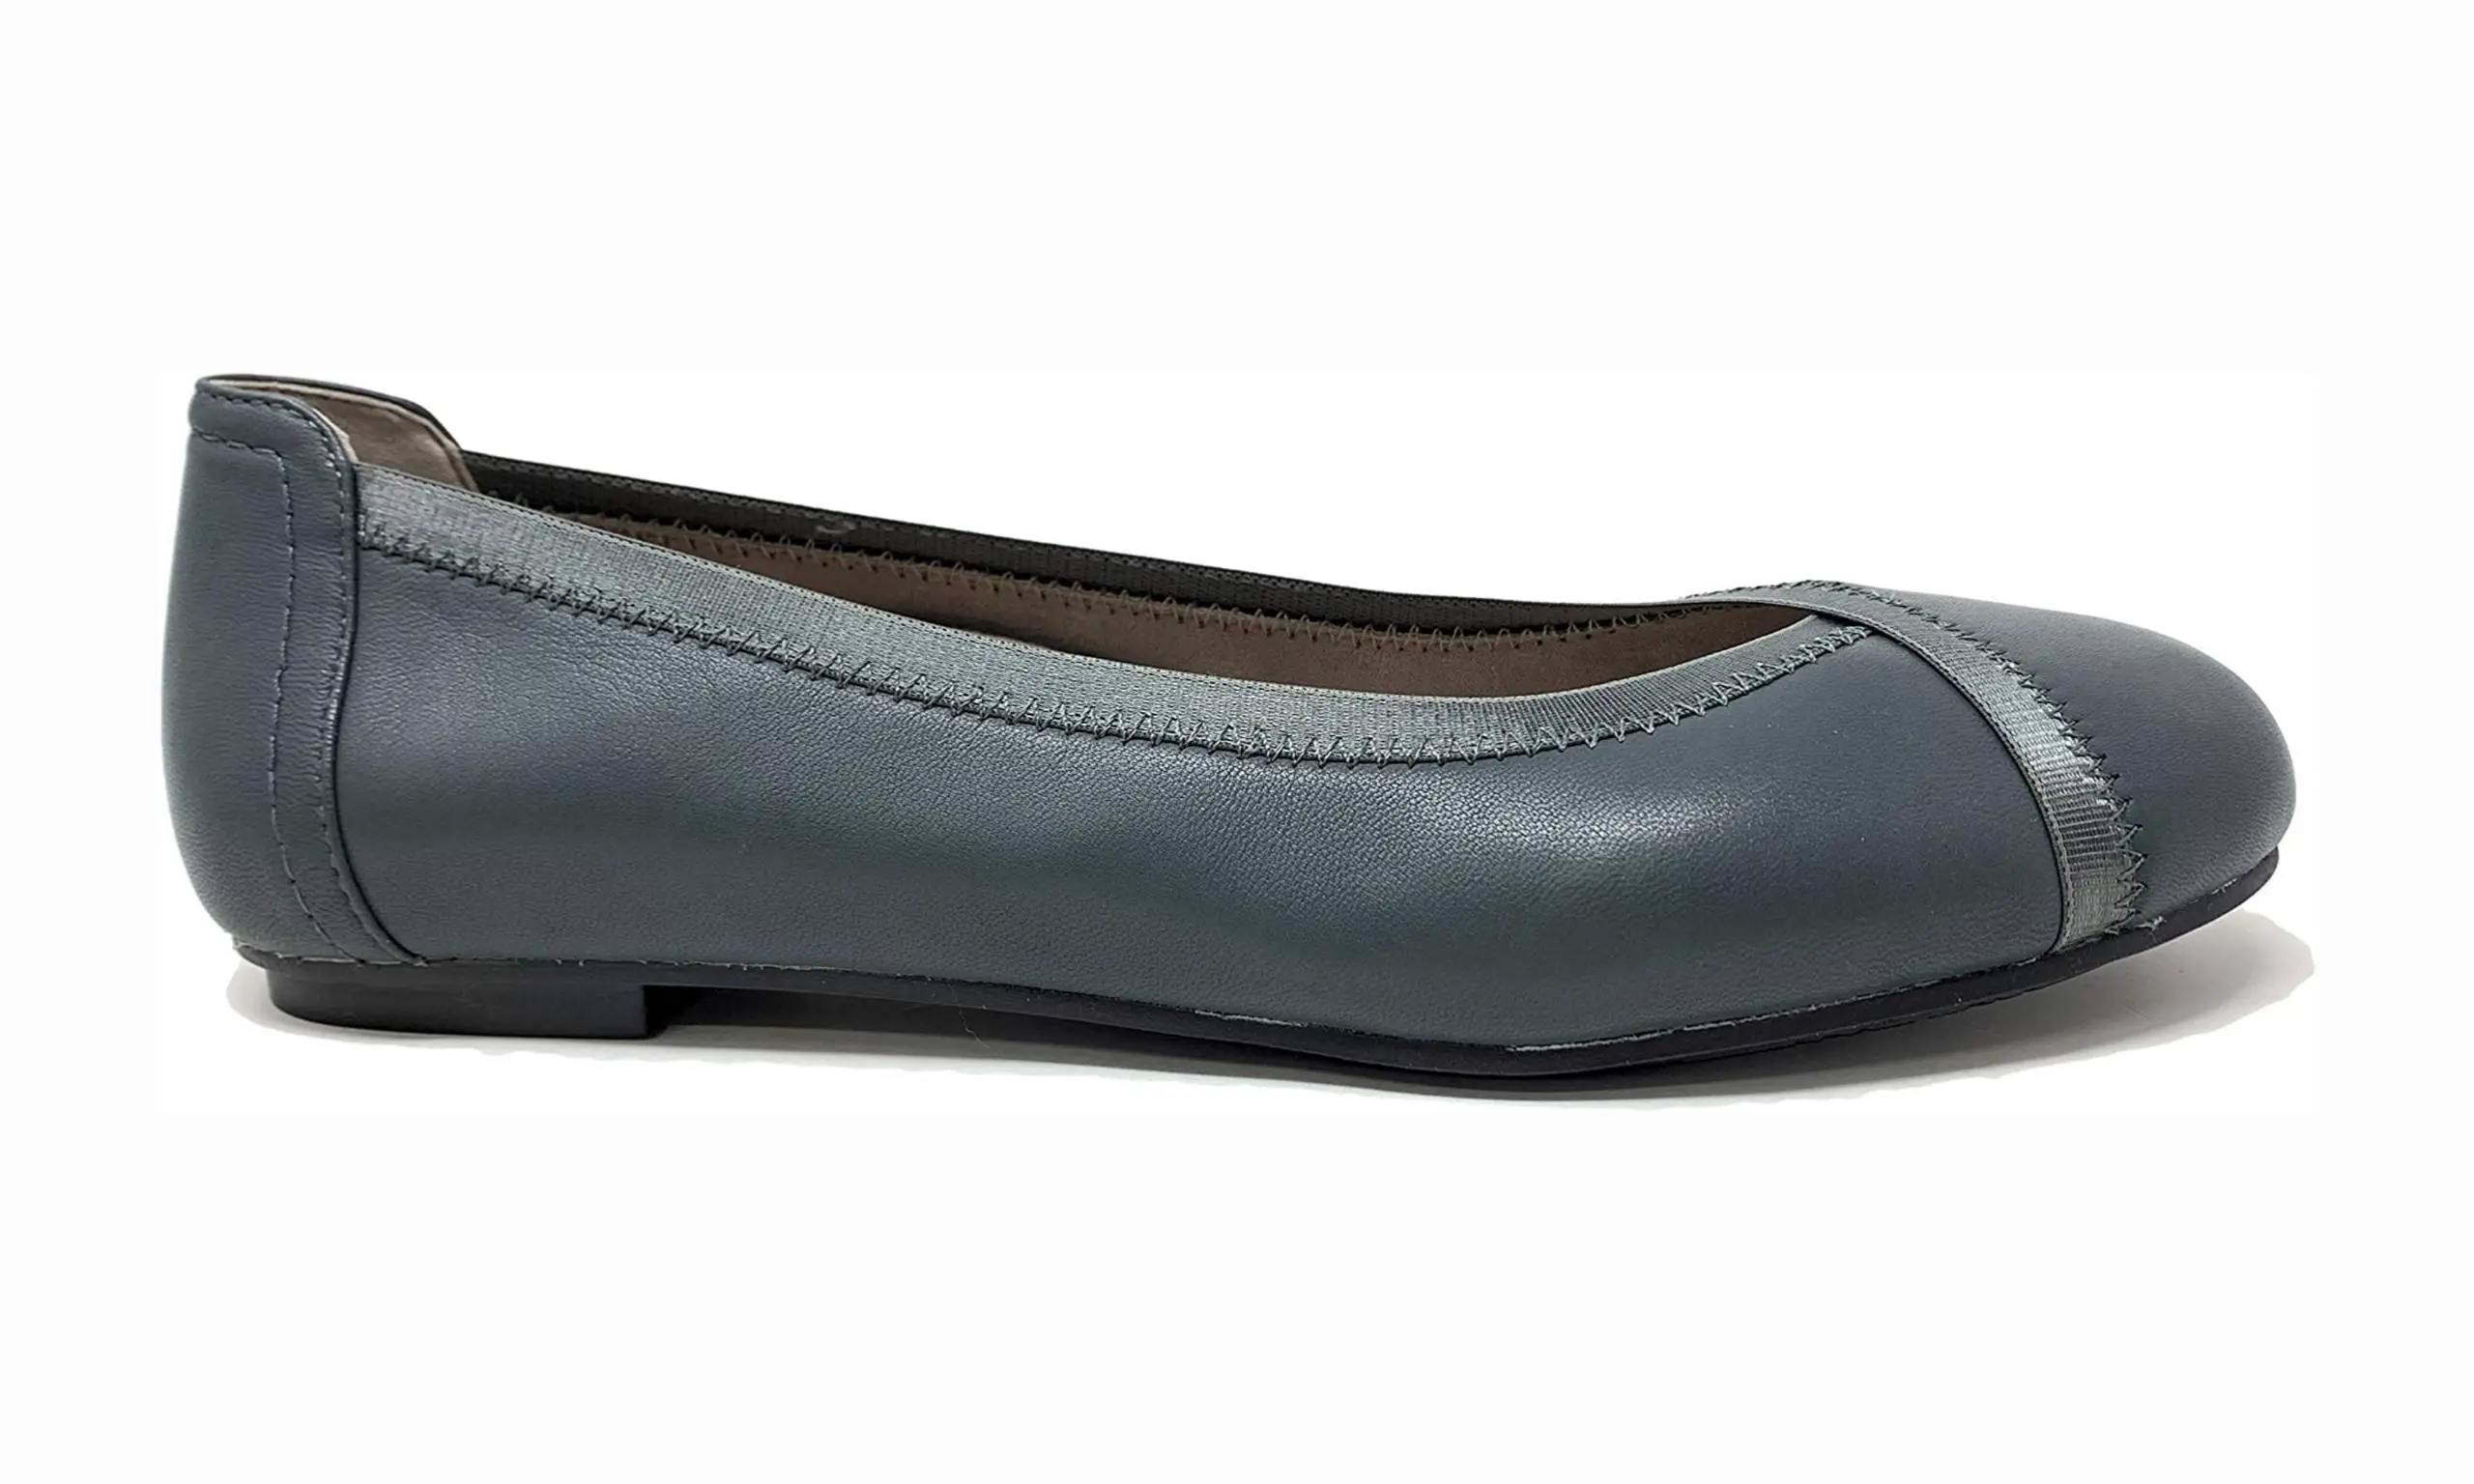 Best women's office shoes for plantar fasciitis